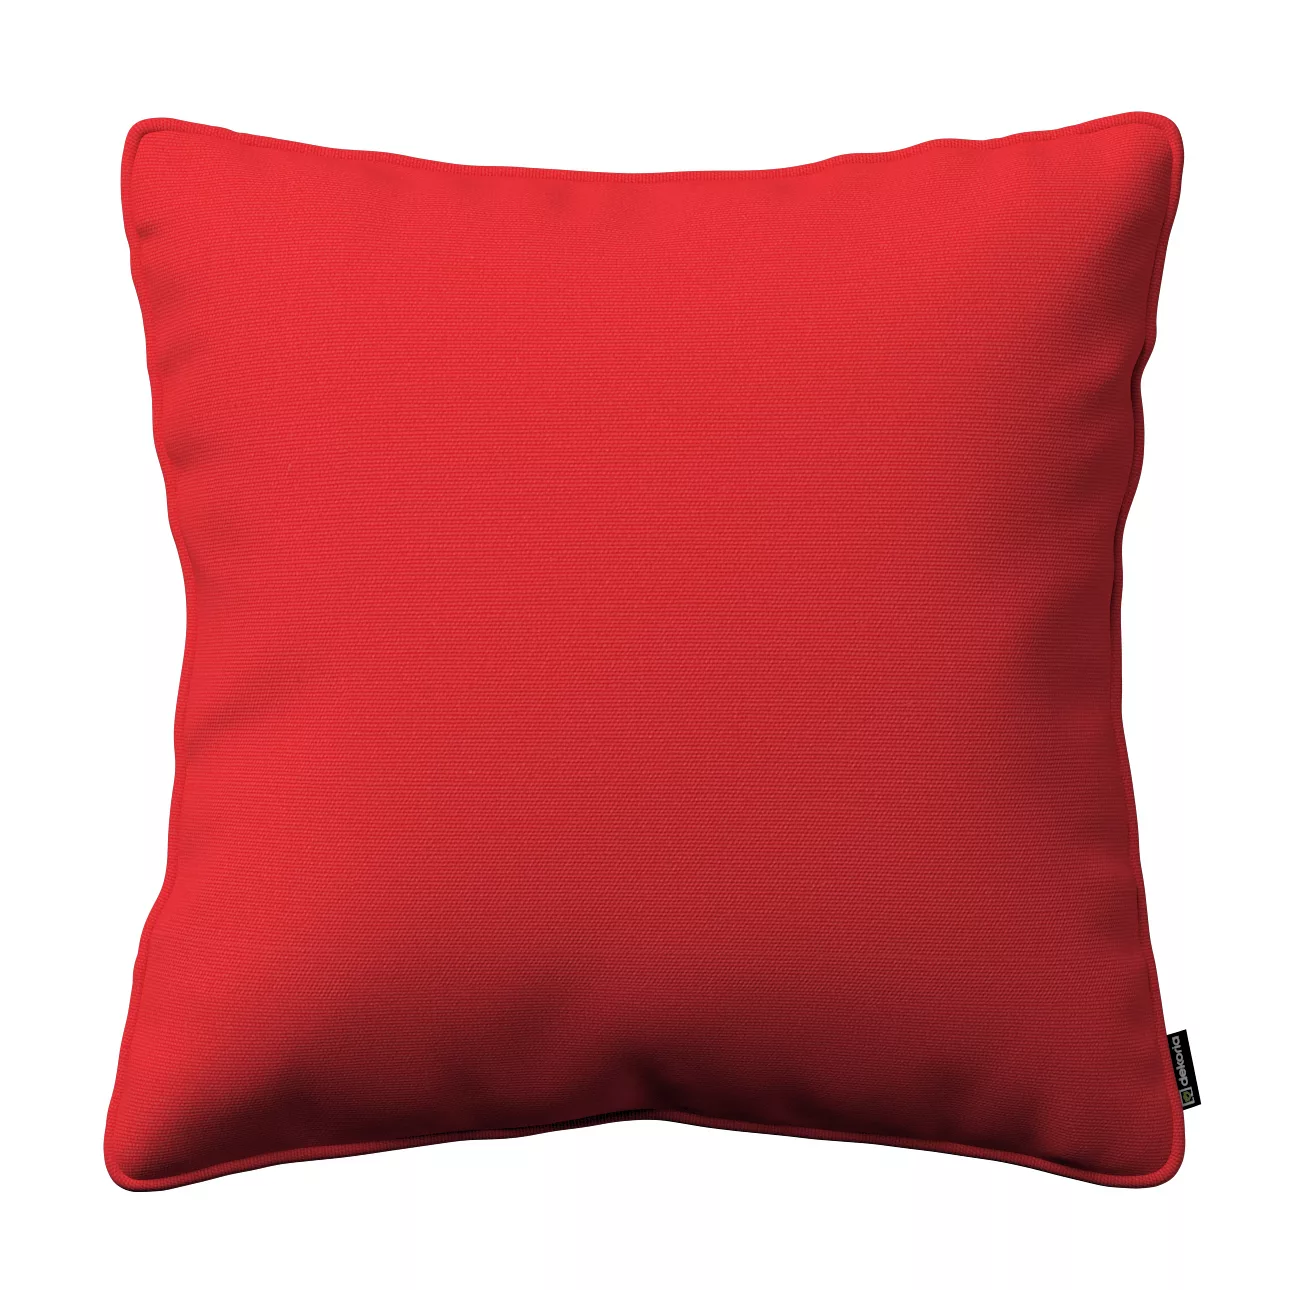 Kissenhülle Gabi mit Paspel, rot, 60 x 60 cm, Loneta (133-43) günstig online kaufen